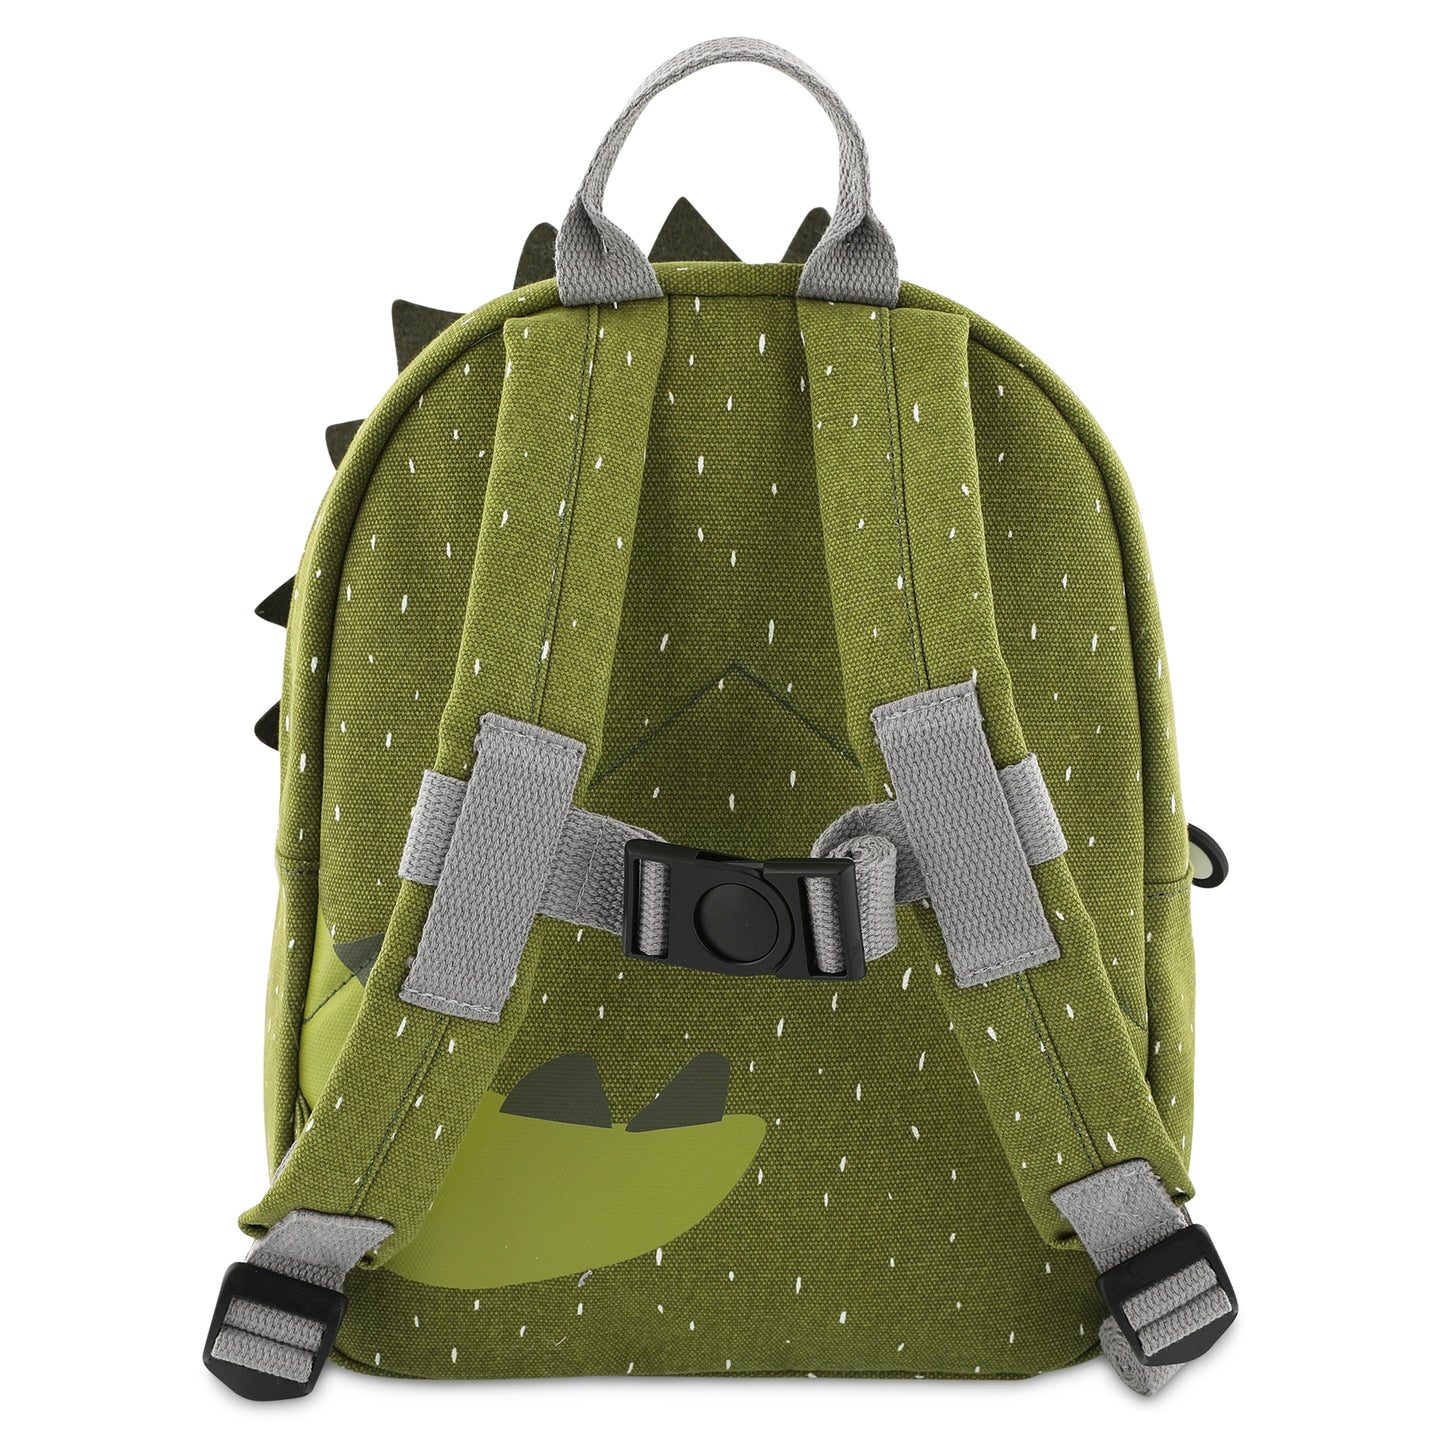 Backpack - Mr. Dino